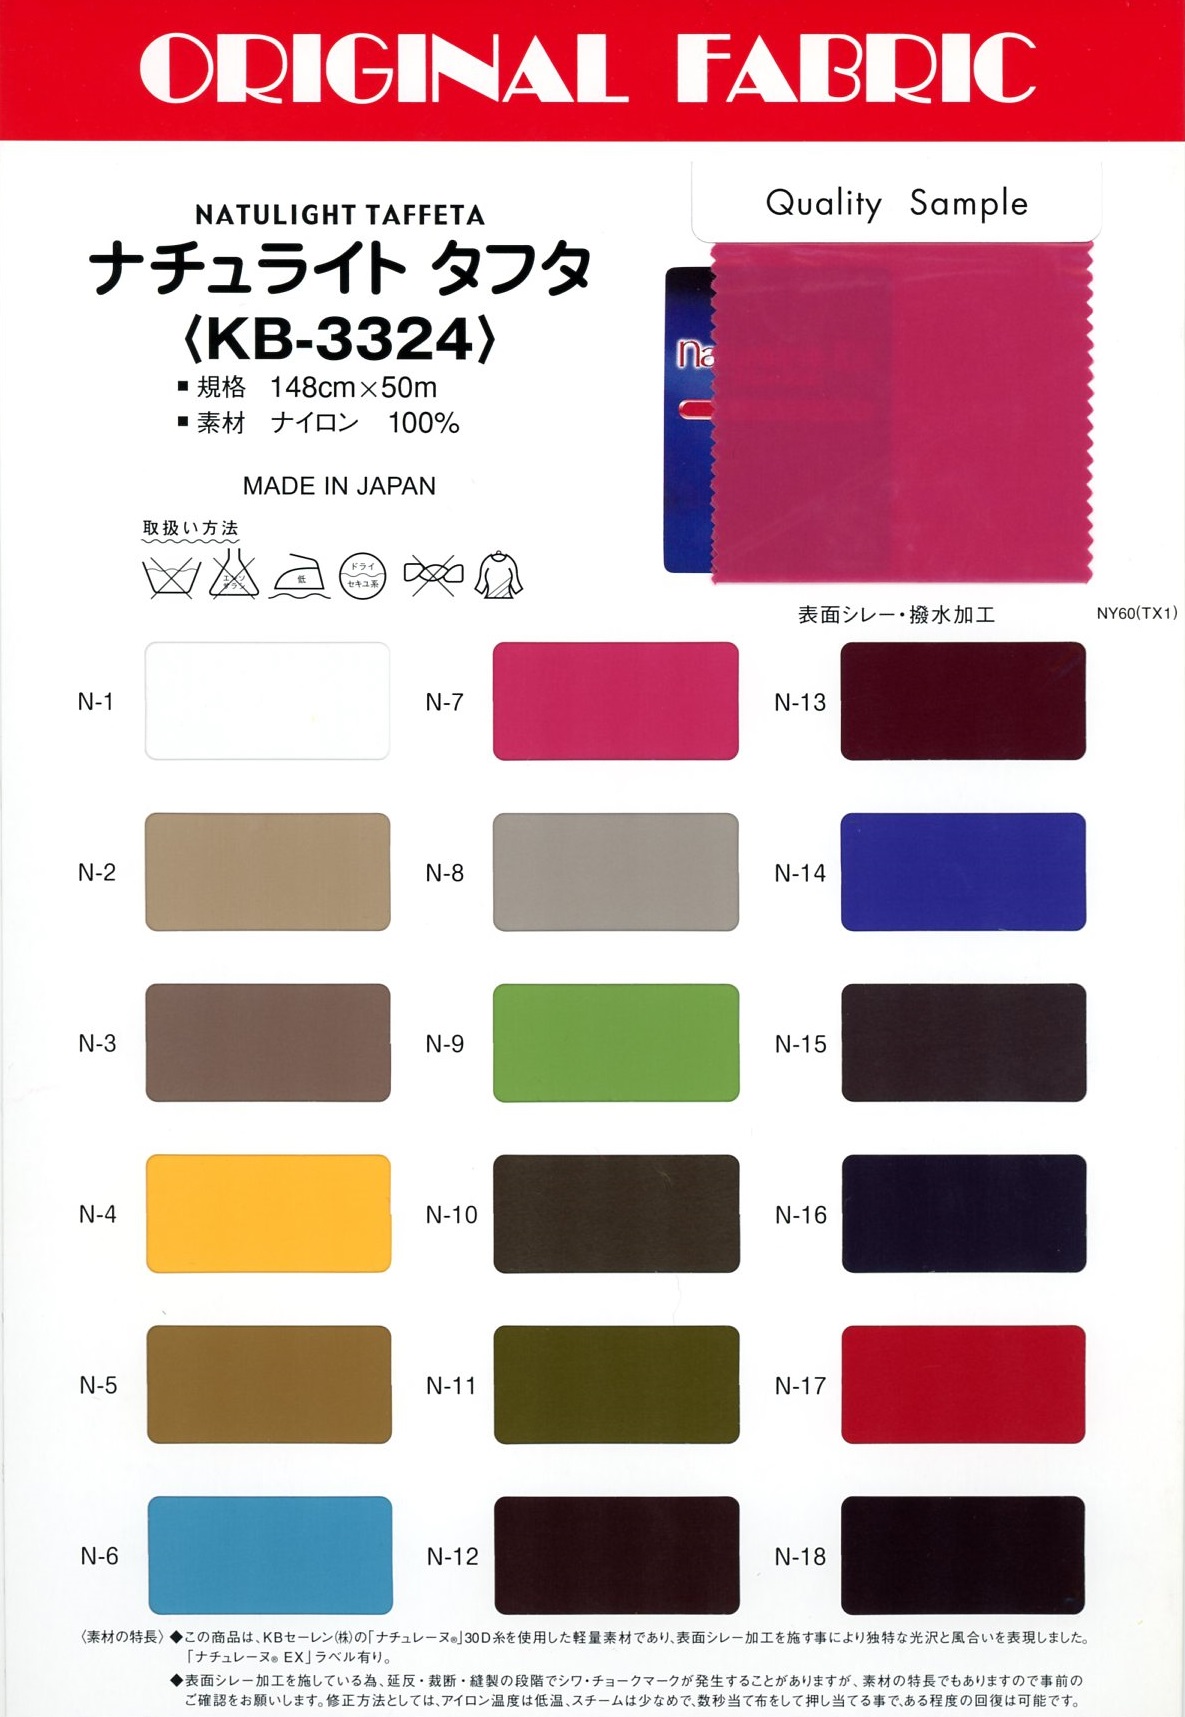 KB-3324 Naturite Taffeta[Fabrication De Textile] Masuda